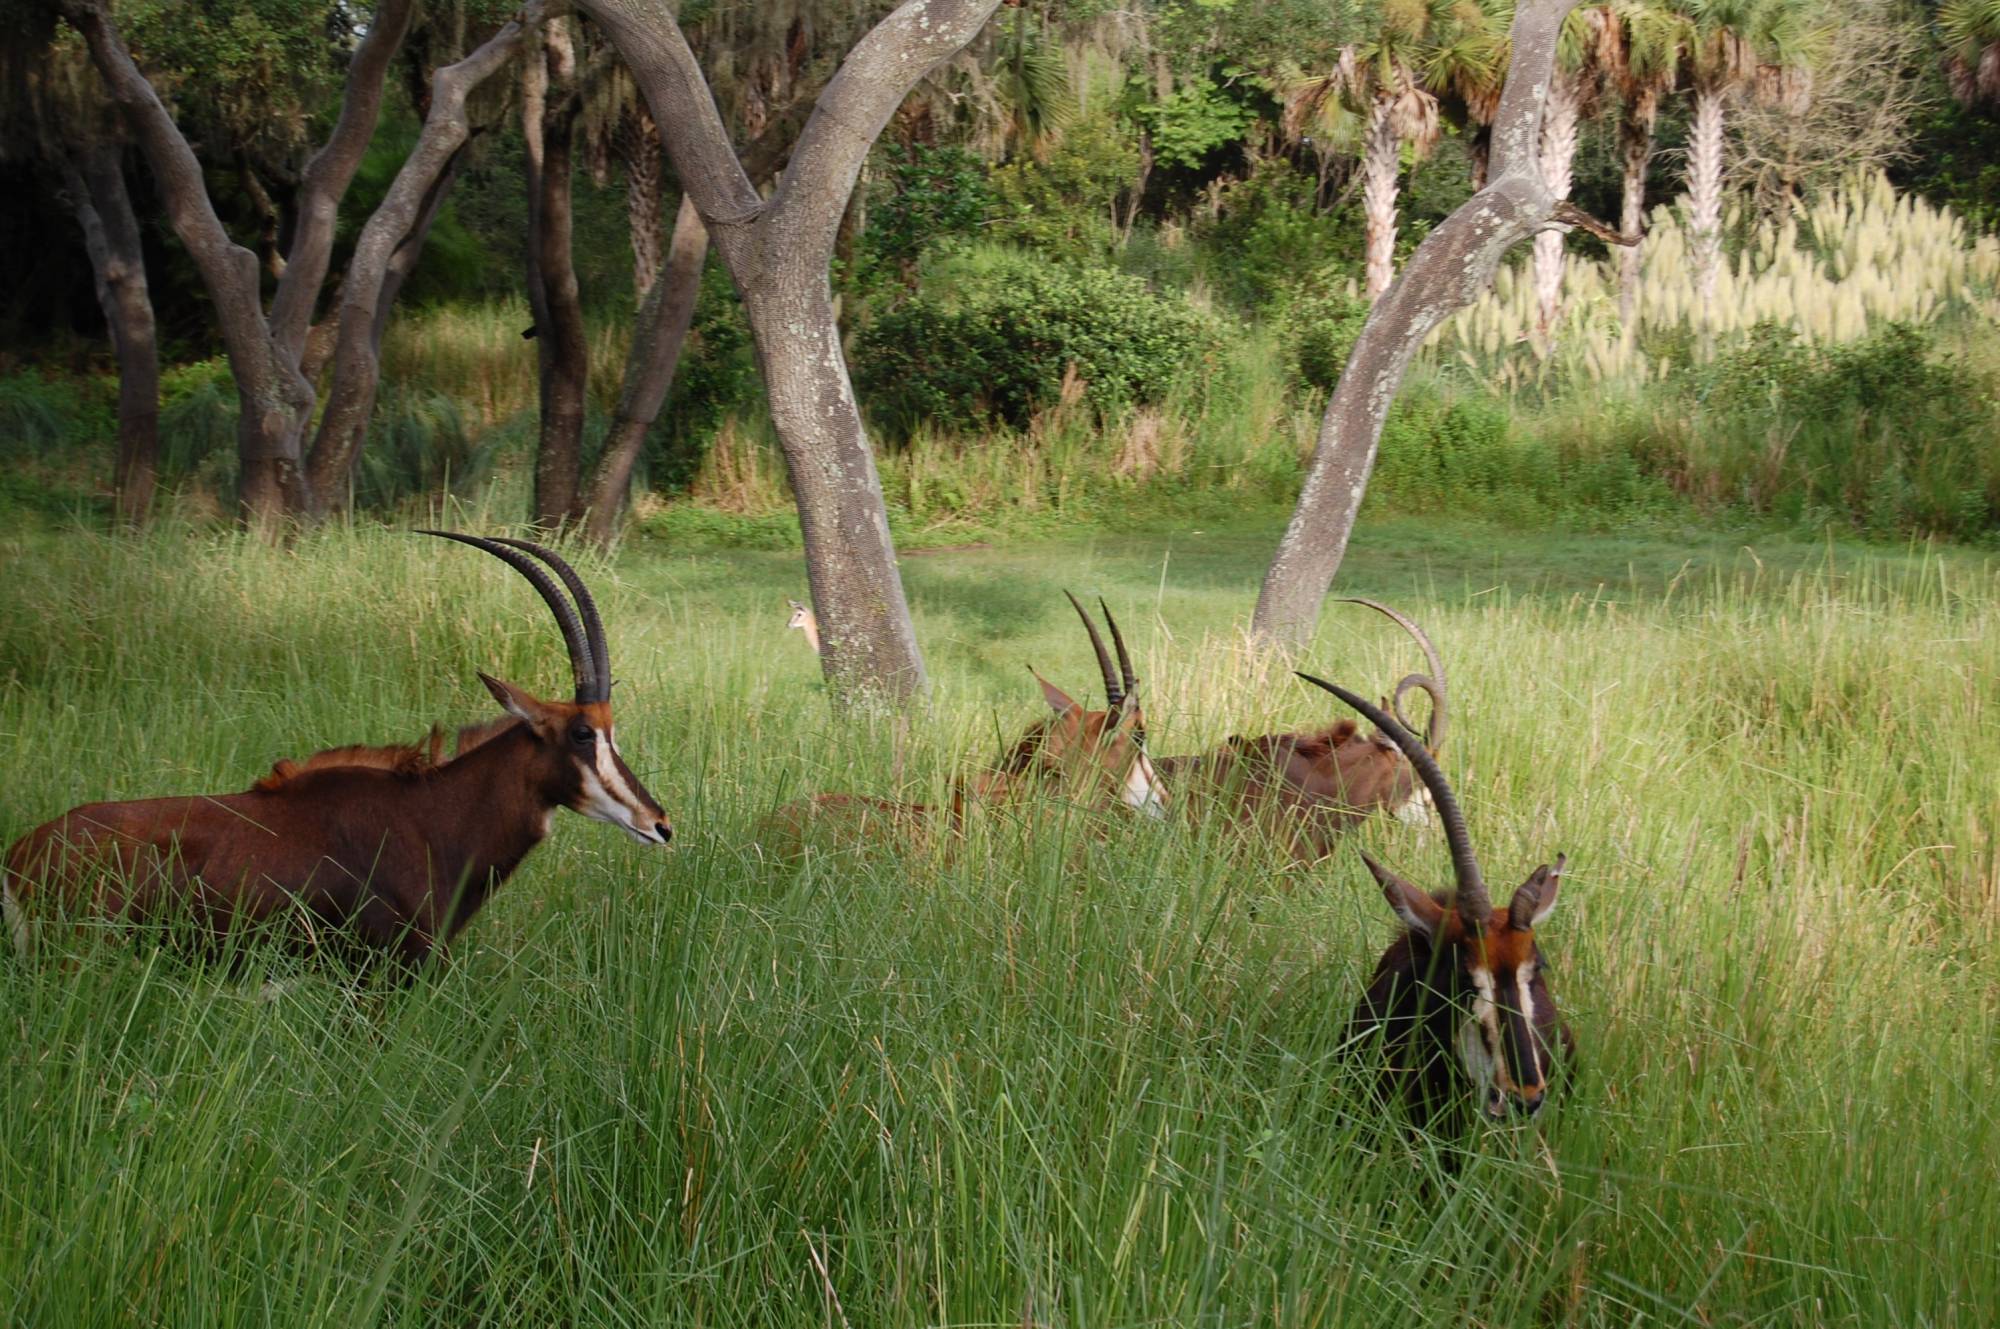 Horned animals on Safari